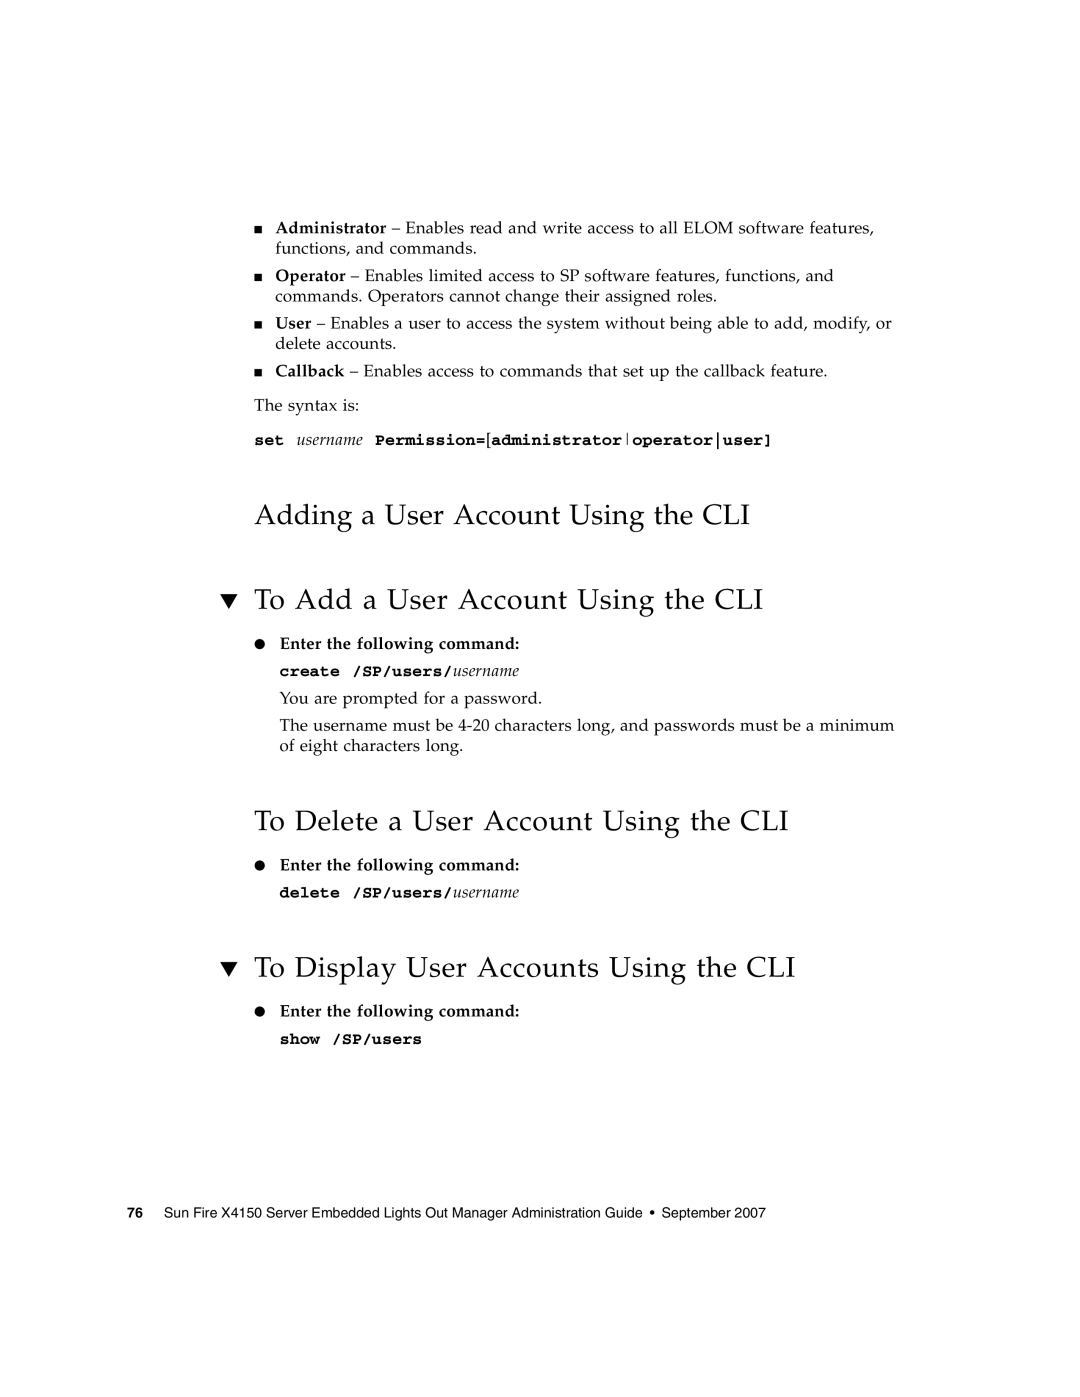 Sun Microsystems X4150 manual Adding a User Account Using the CLI, To Add a User Account Using the CLI 